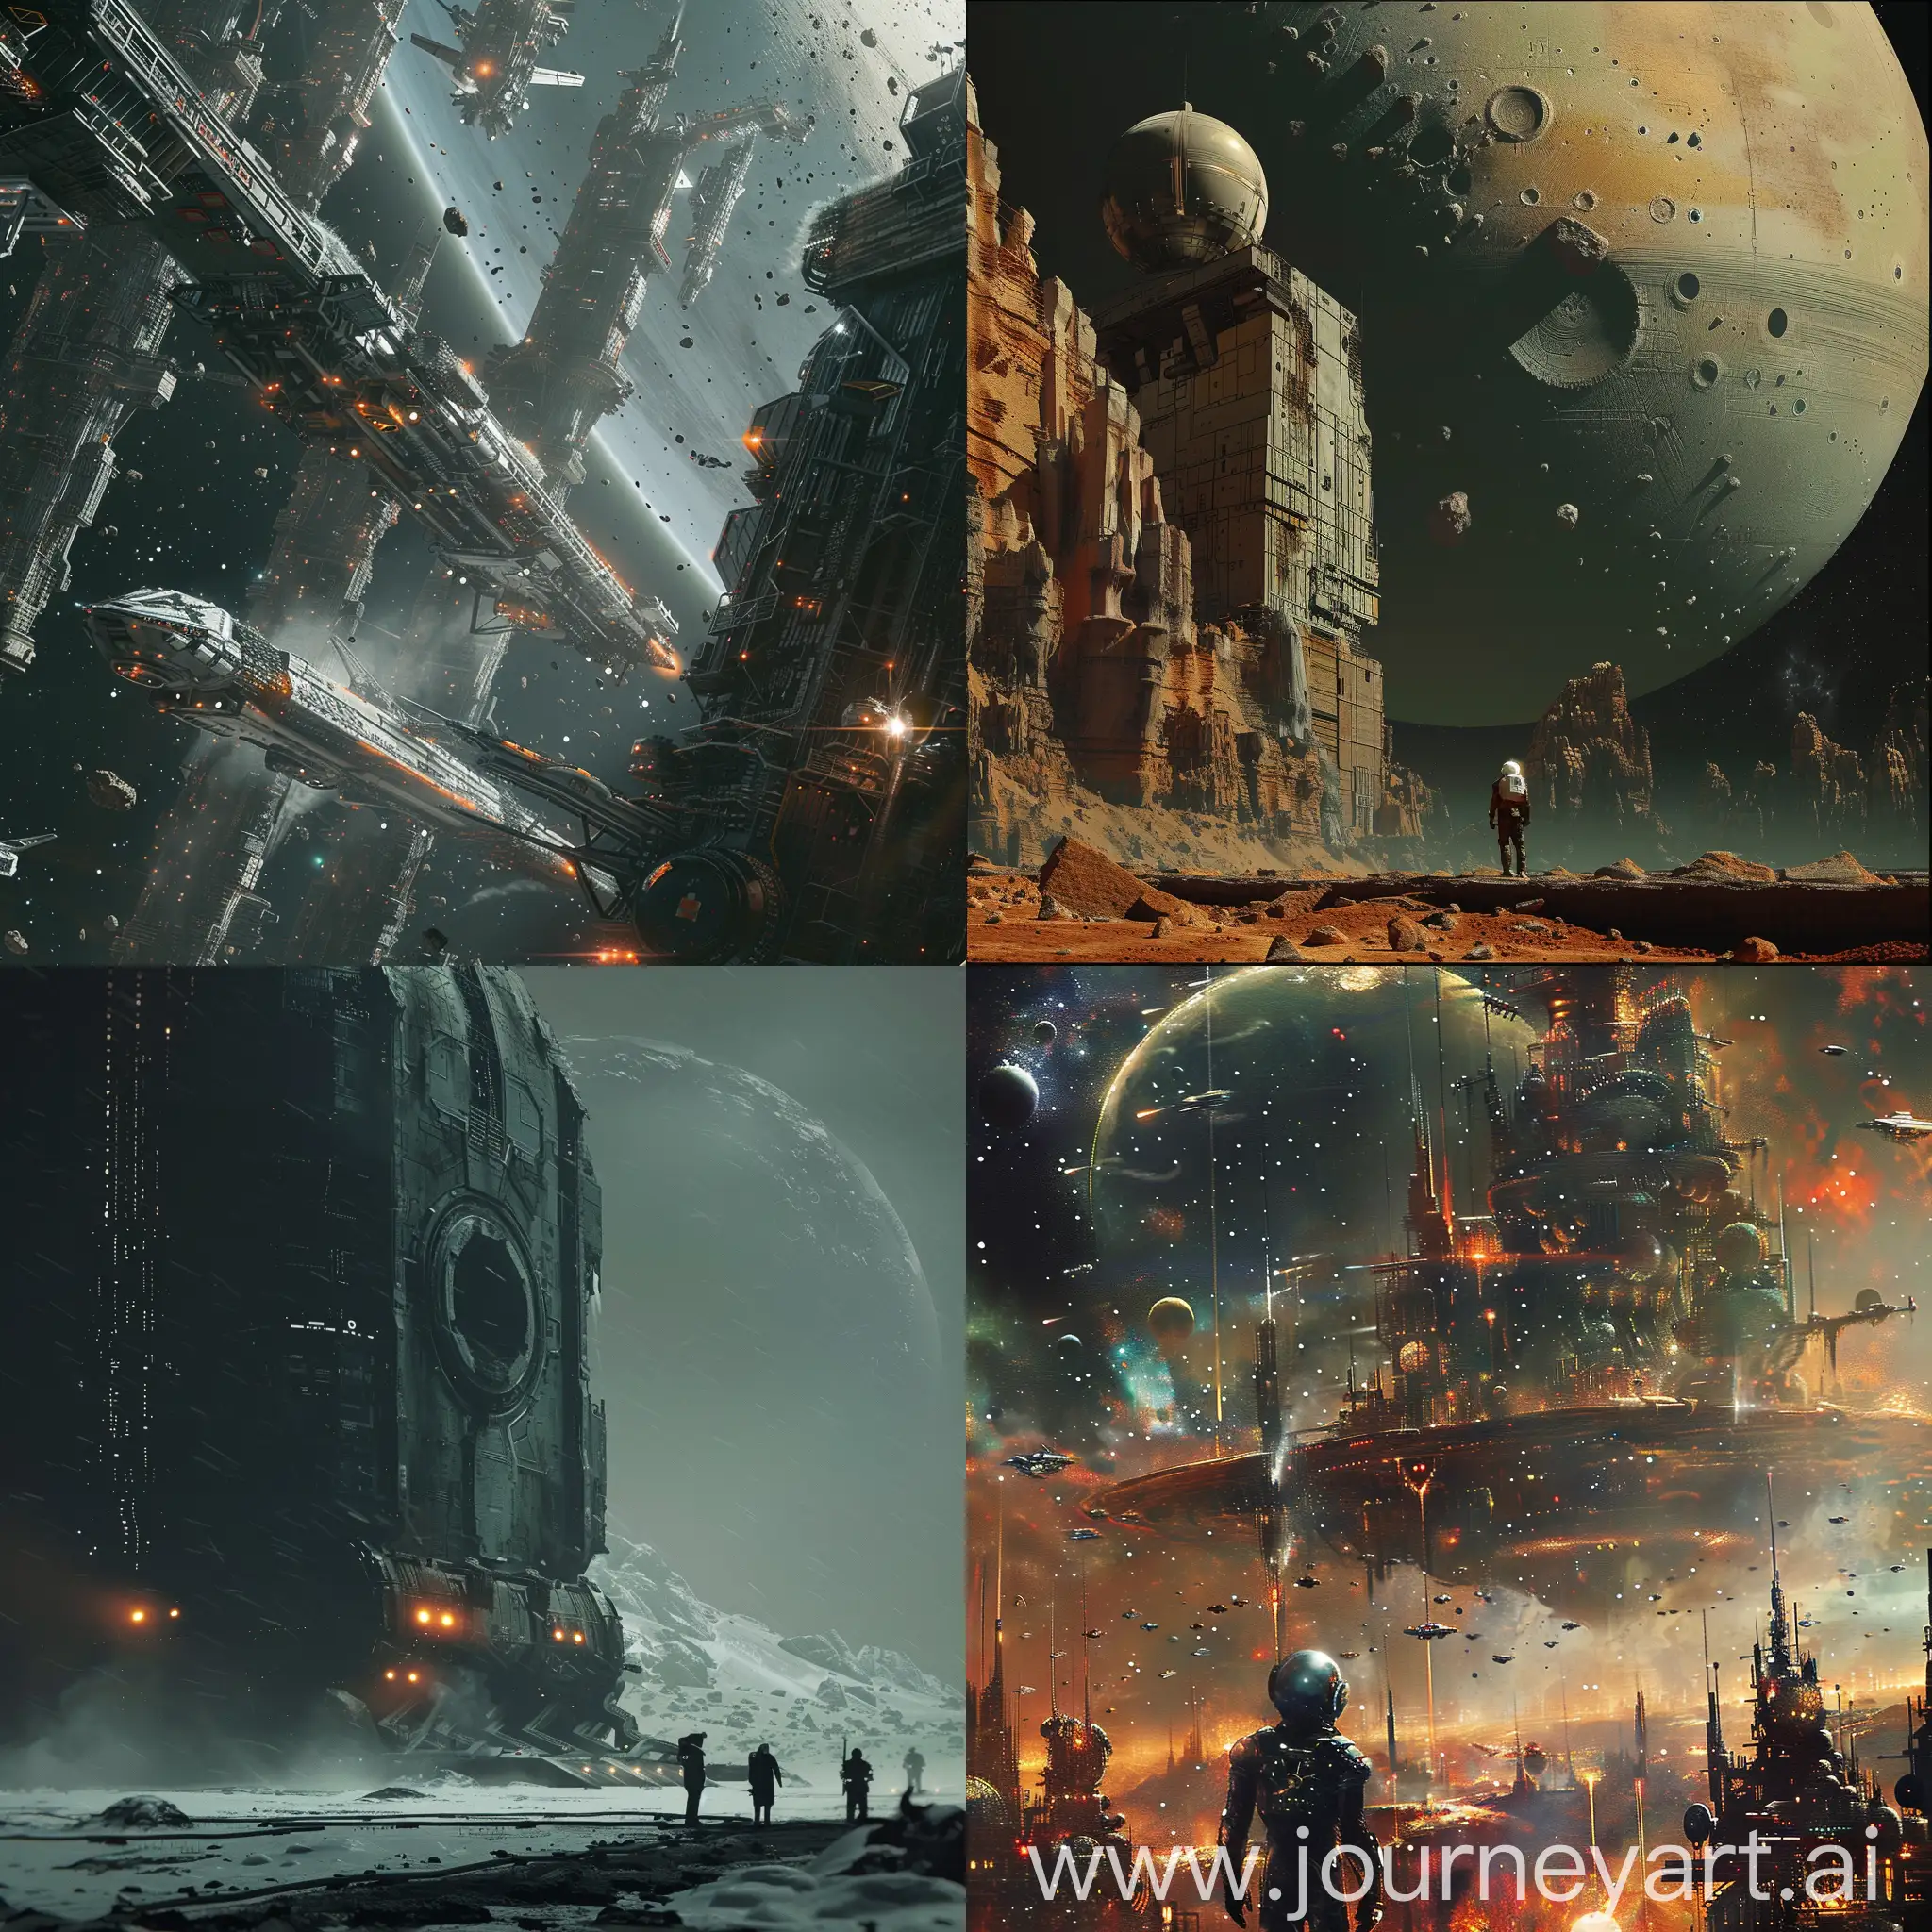 Futuristic-Space-Exploration-Dystopian-Voyage-in-Vastness